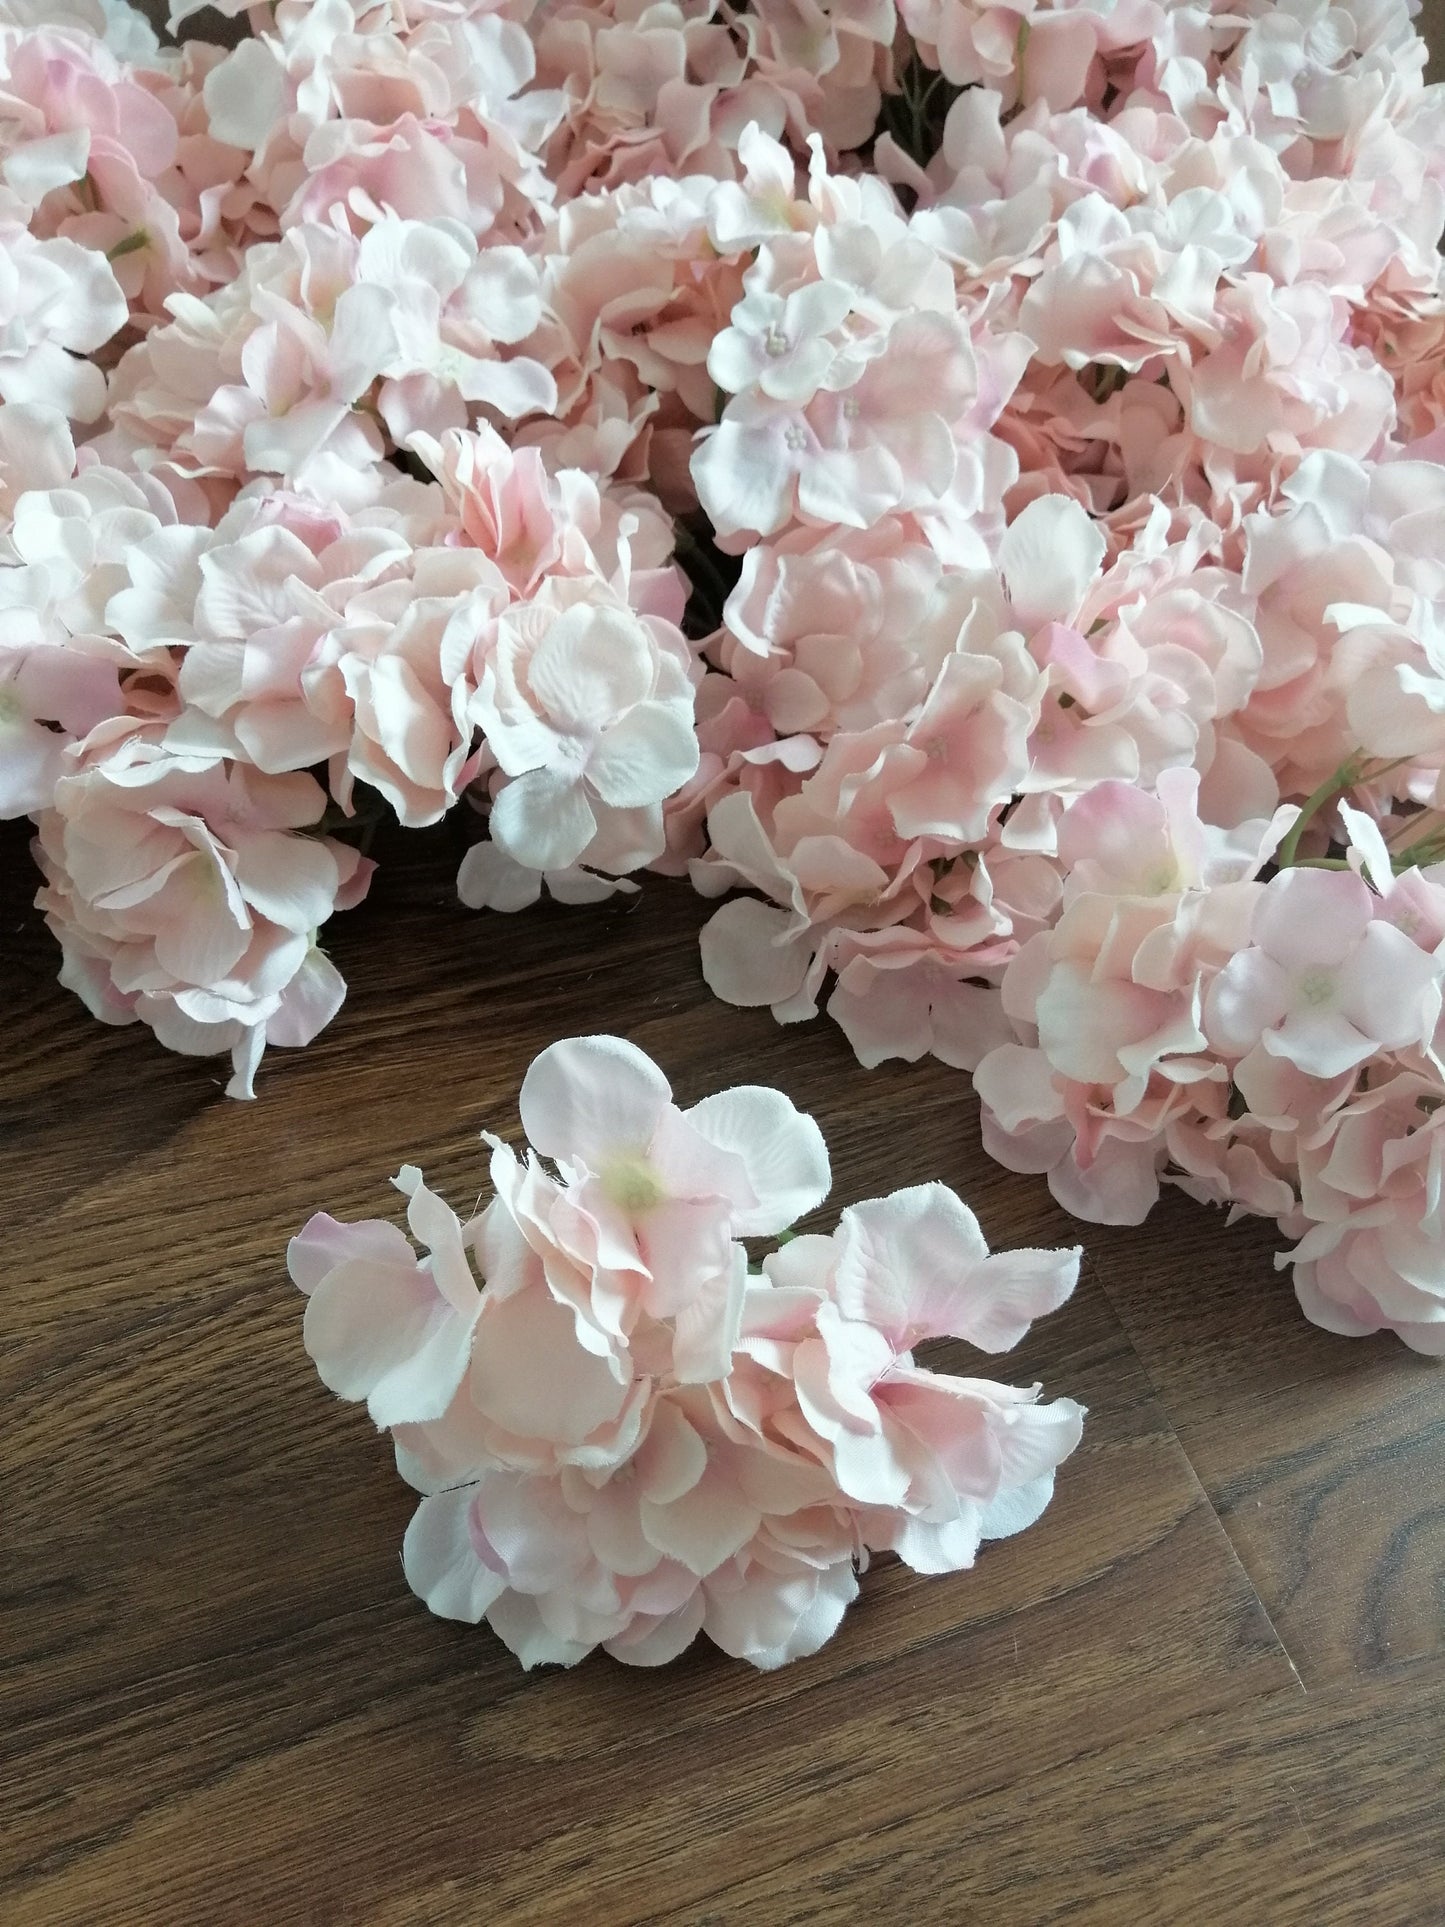 Wholesale Baby Pink Wedding Hydrangeas Flowers 50 Heads Diam.15cm DIY Wedding Bride Shower Baby Shower DIY Decoration